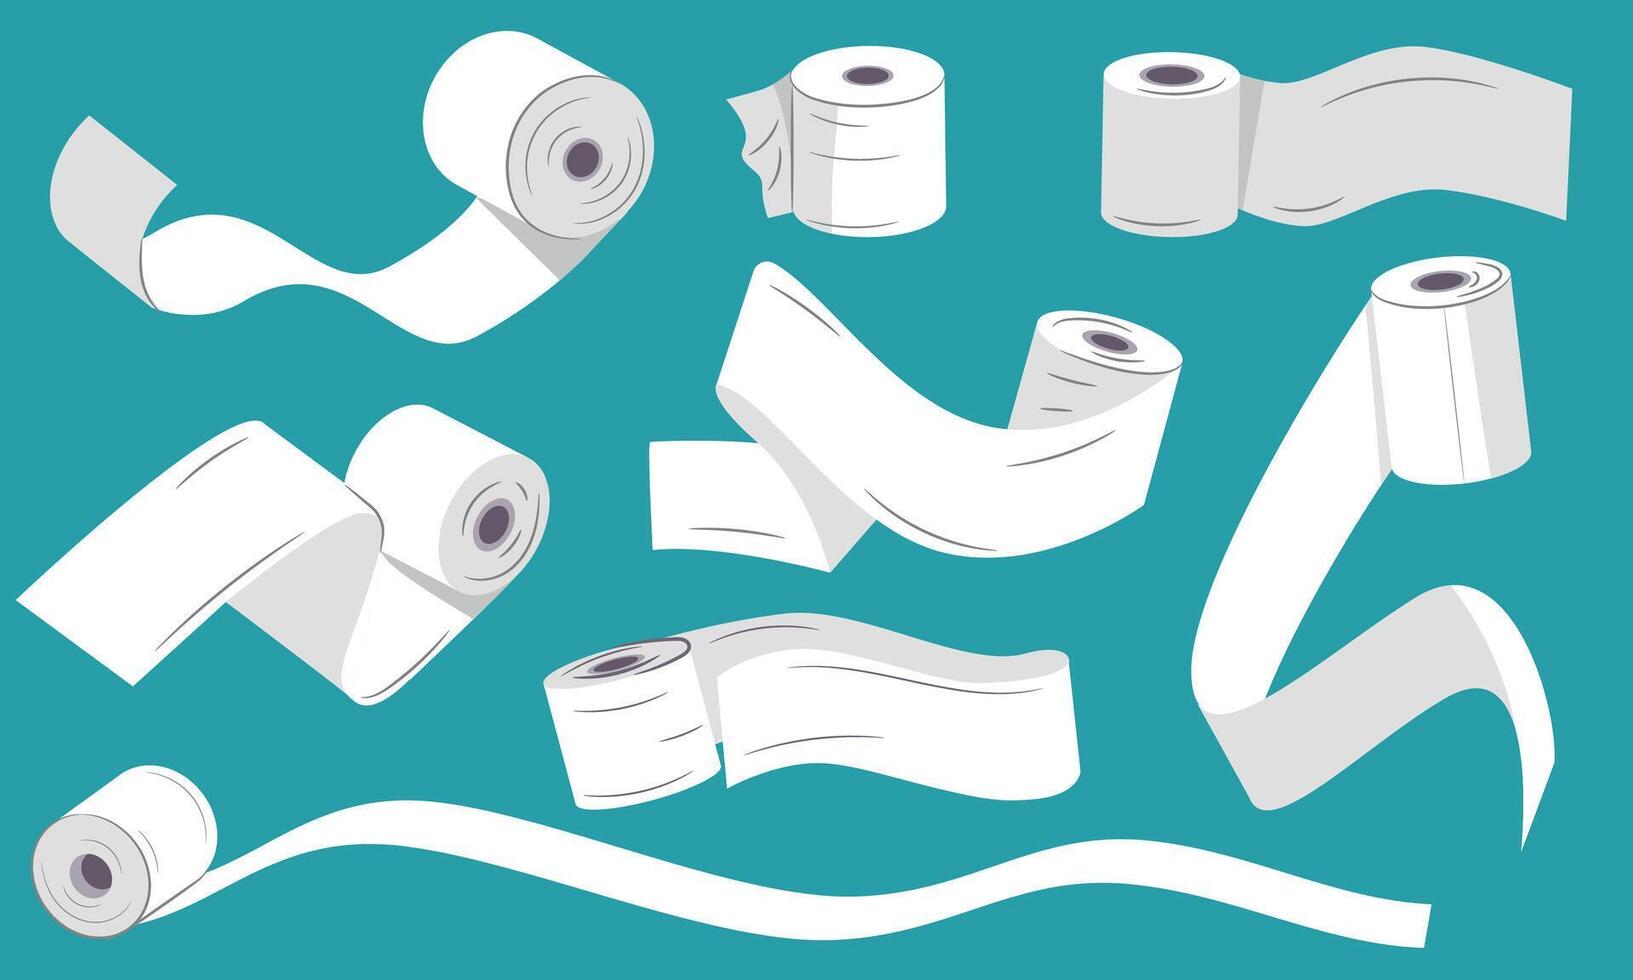 desenrollado baño papel. pañuelo de papel rodar con cintas, desenrollado mano toalla y papel servilleta, volador baño papel servilleta higiene concepto. vector conjunto